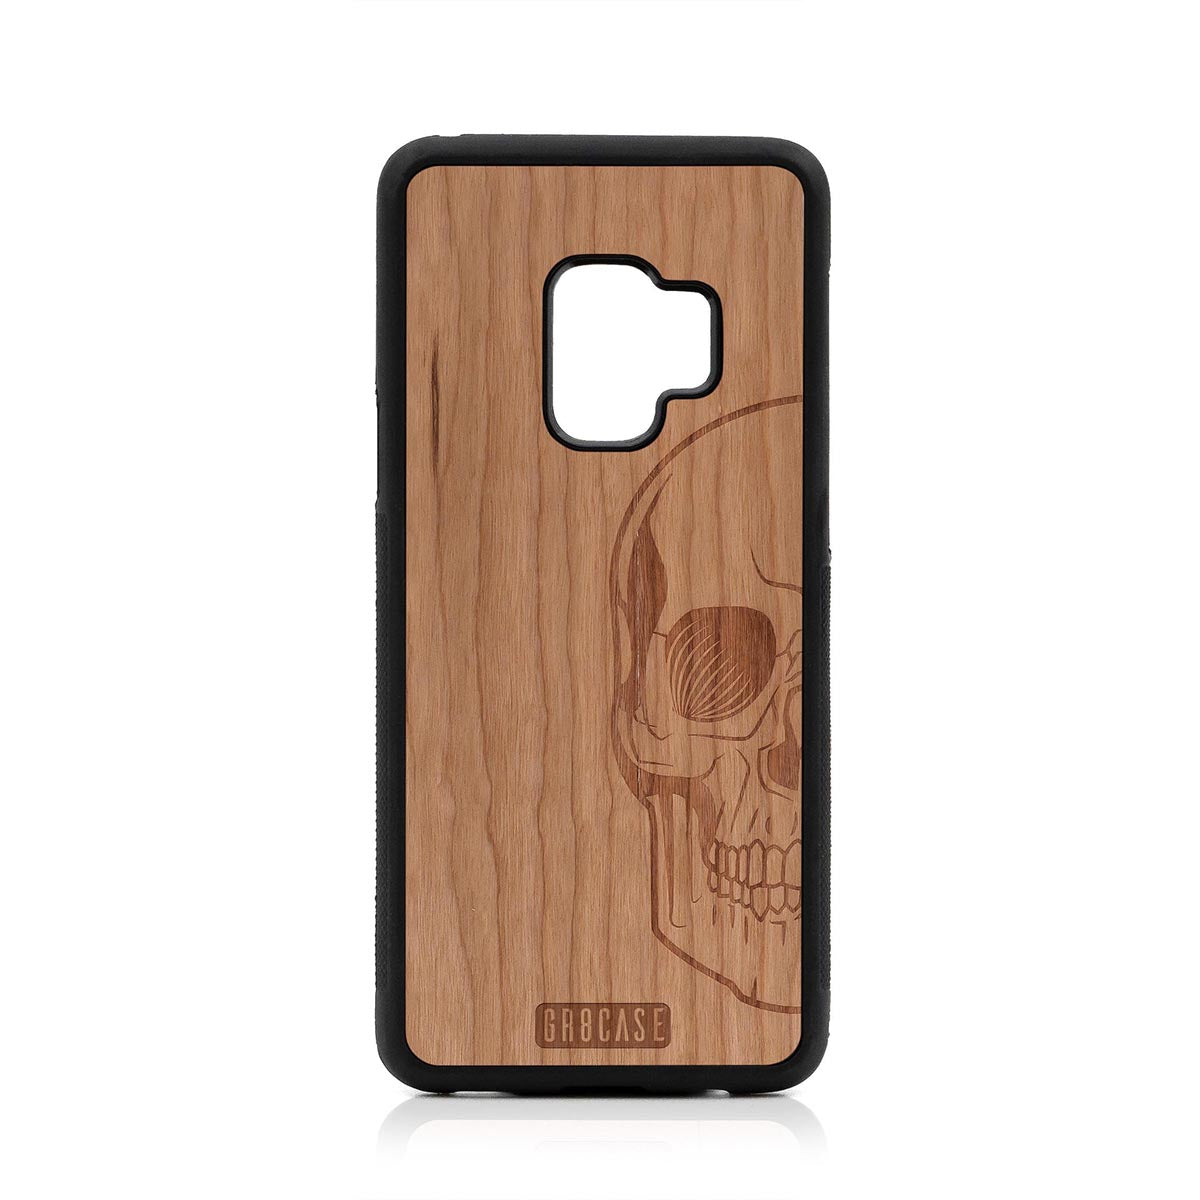 Half Skull Design Wood Case Samsung Galaxy S9 by GR8CASE